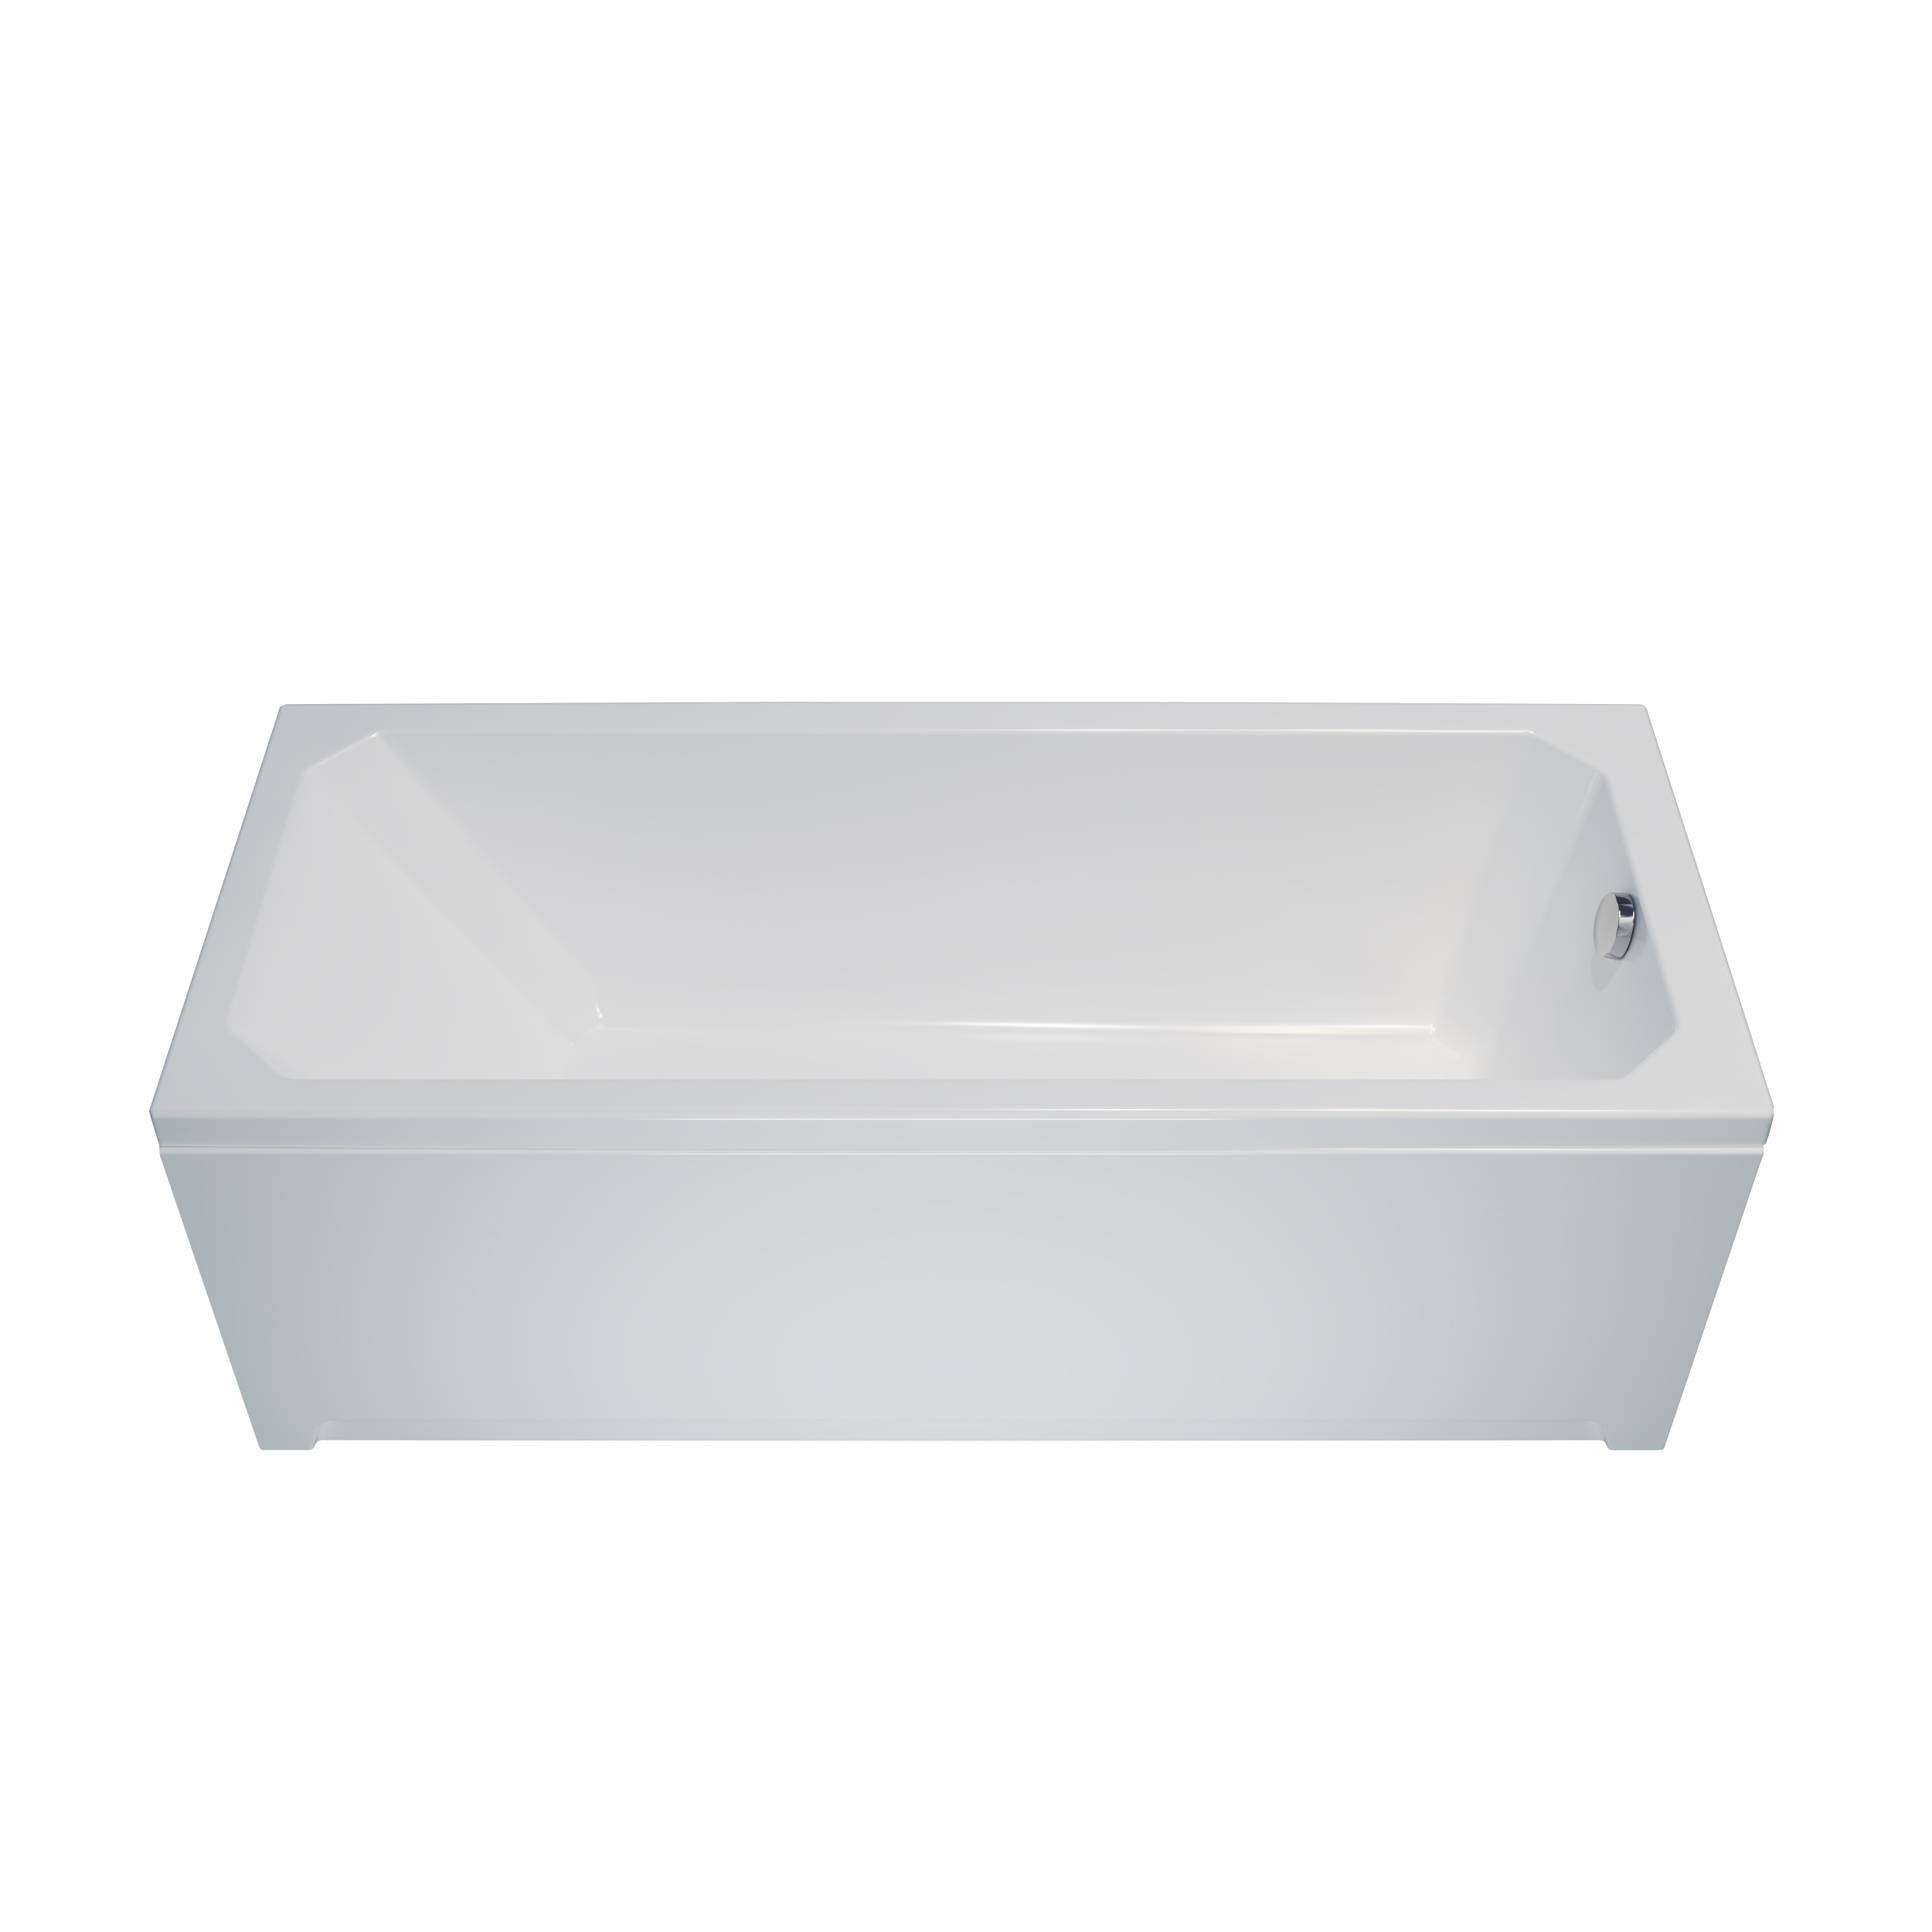 Акриловая ванна Тритон Прага 150x70, размер 150x70, цвет белый Щ0000049117 - фото 6